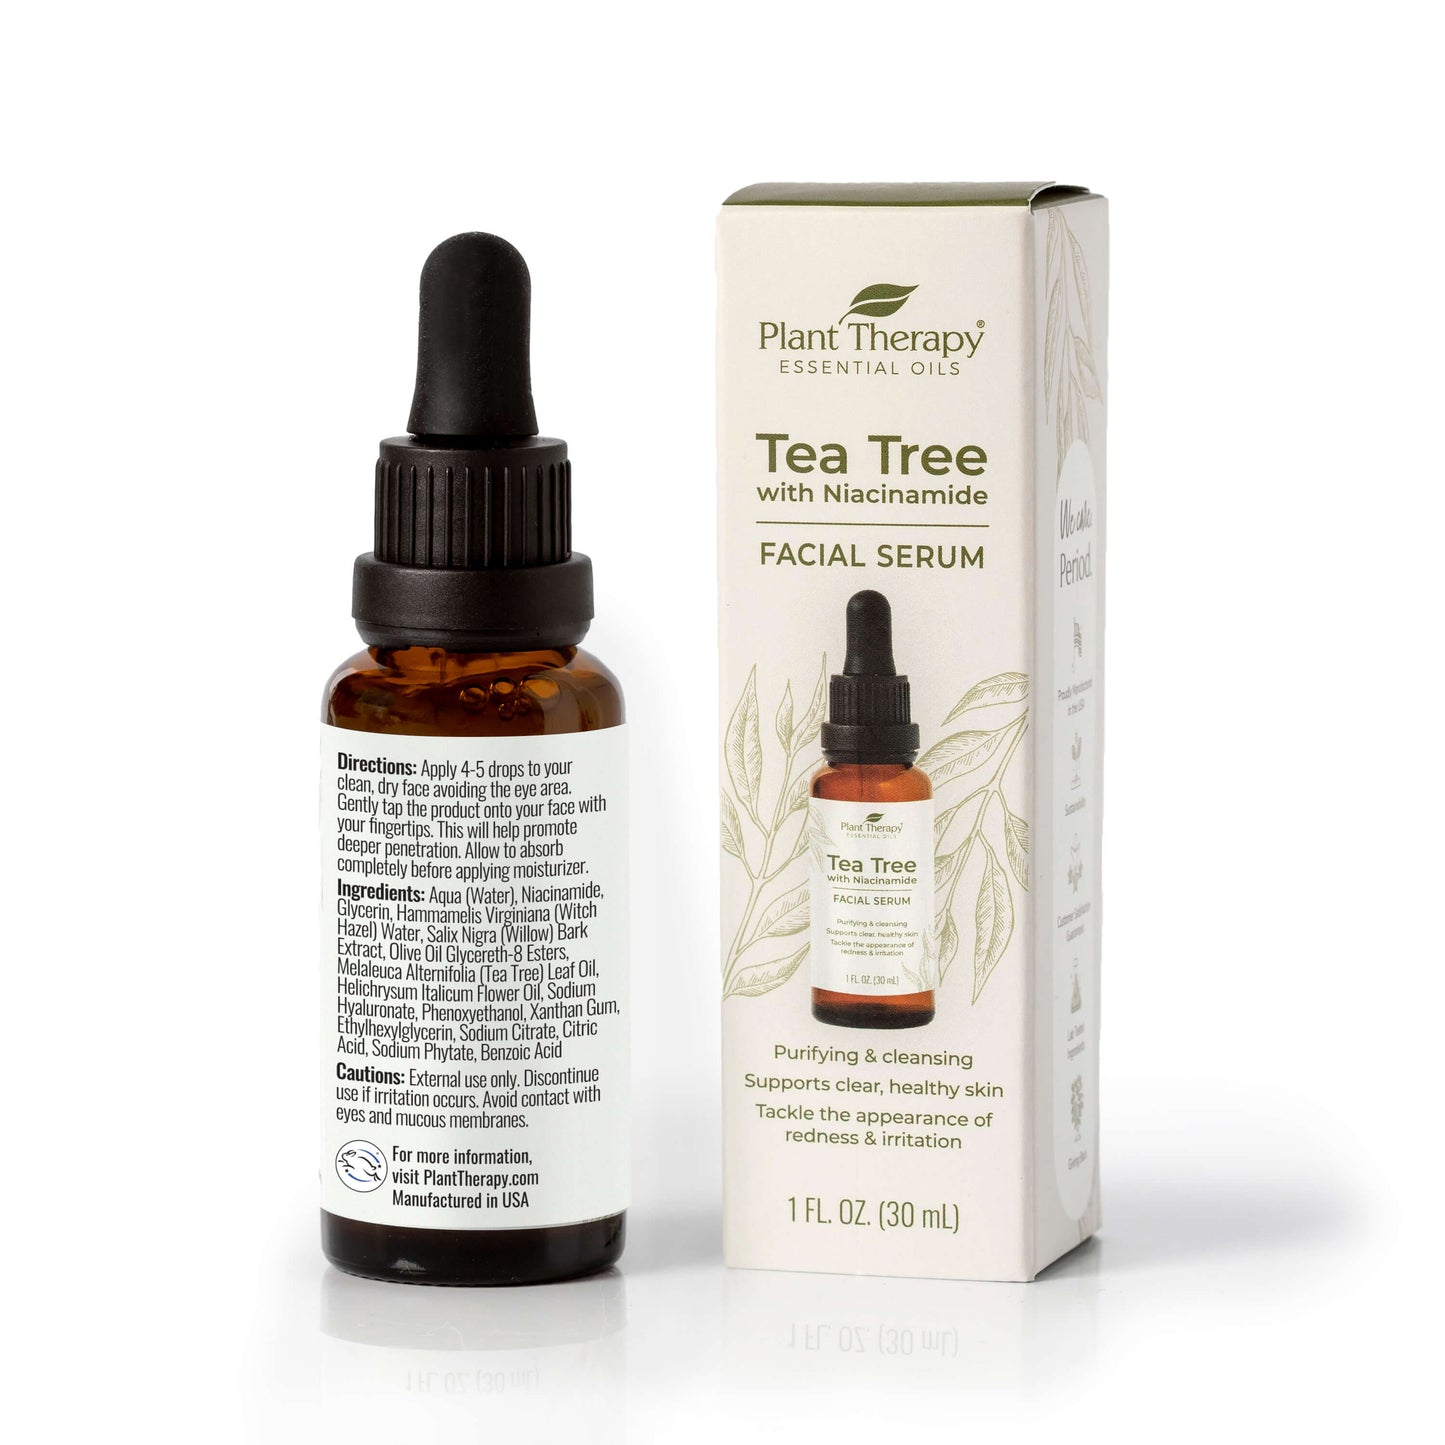 Tea Tree with Niacinamide Facial Serum